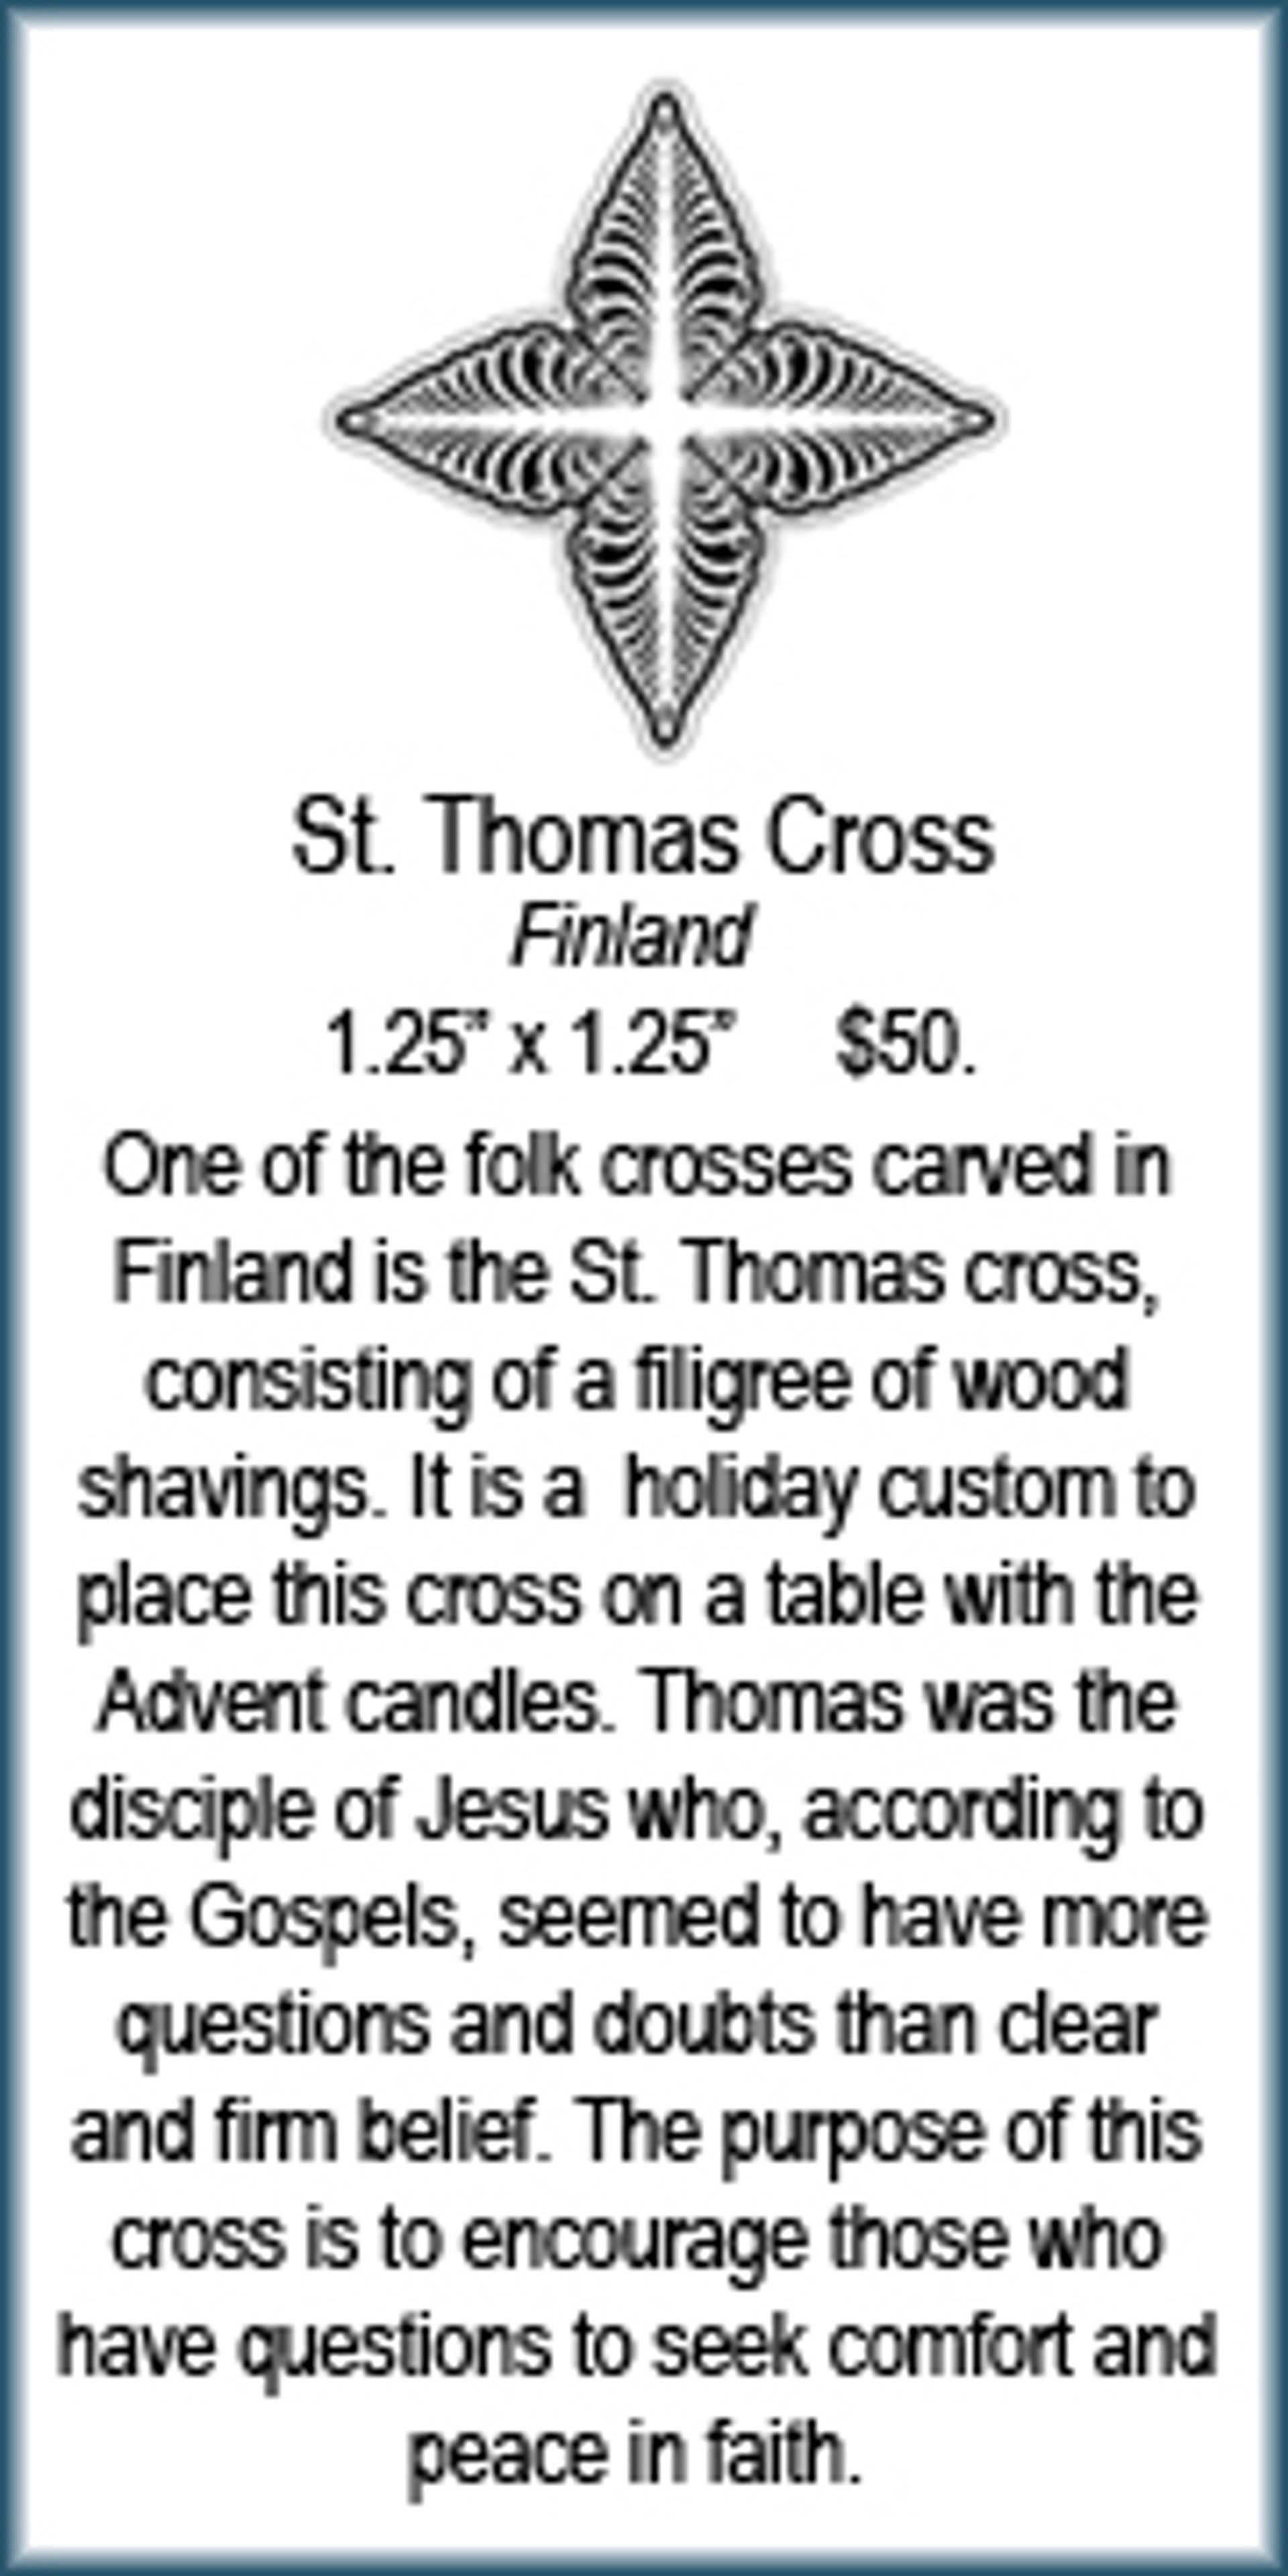 Cross - St. Thomas by Deanne McKeown